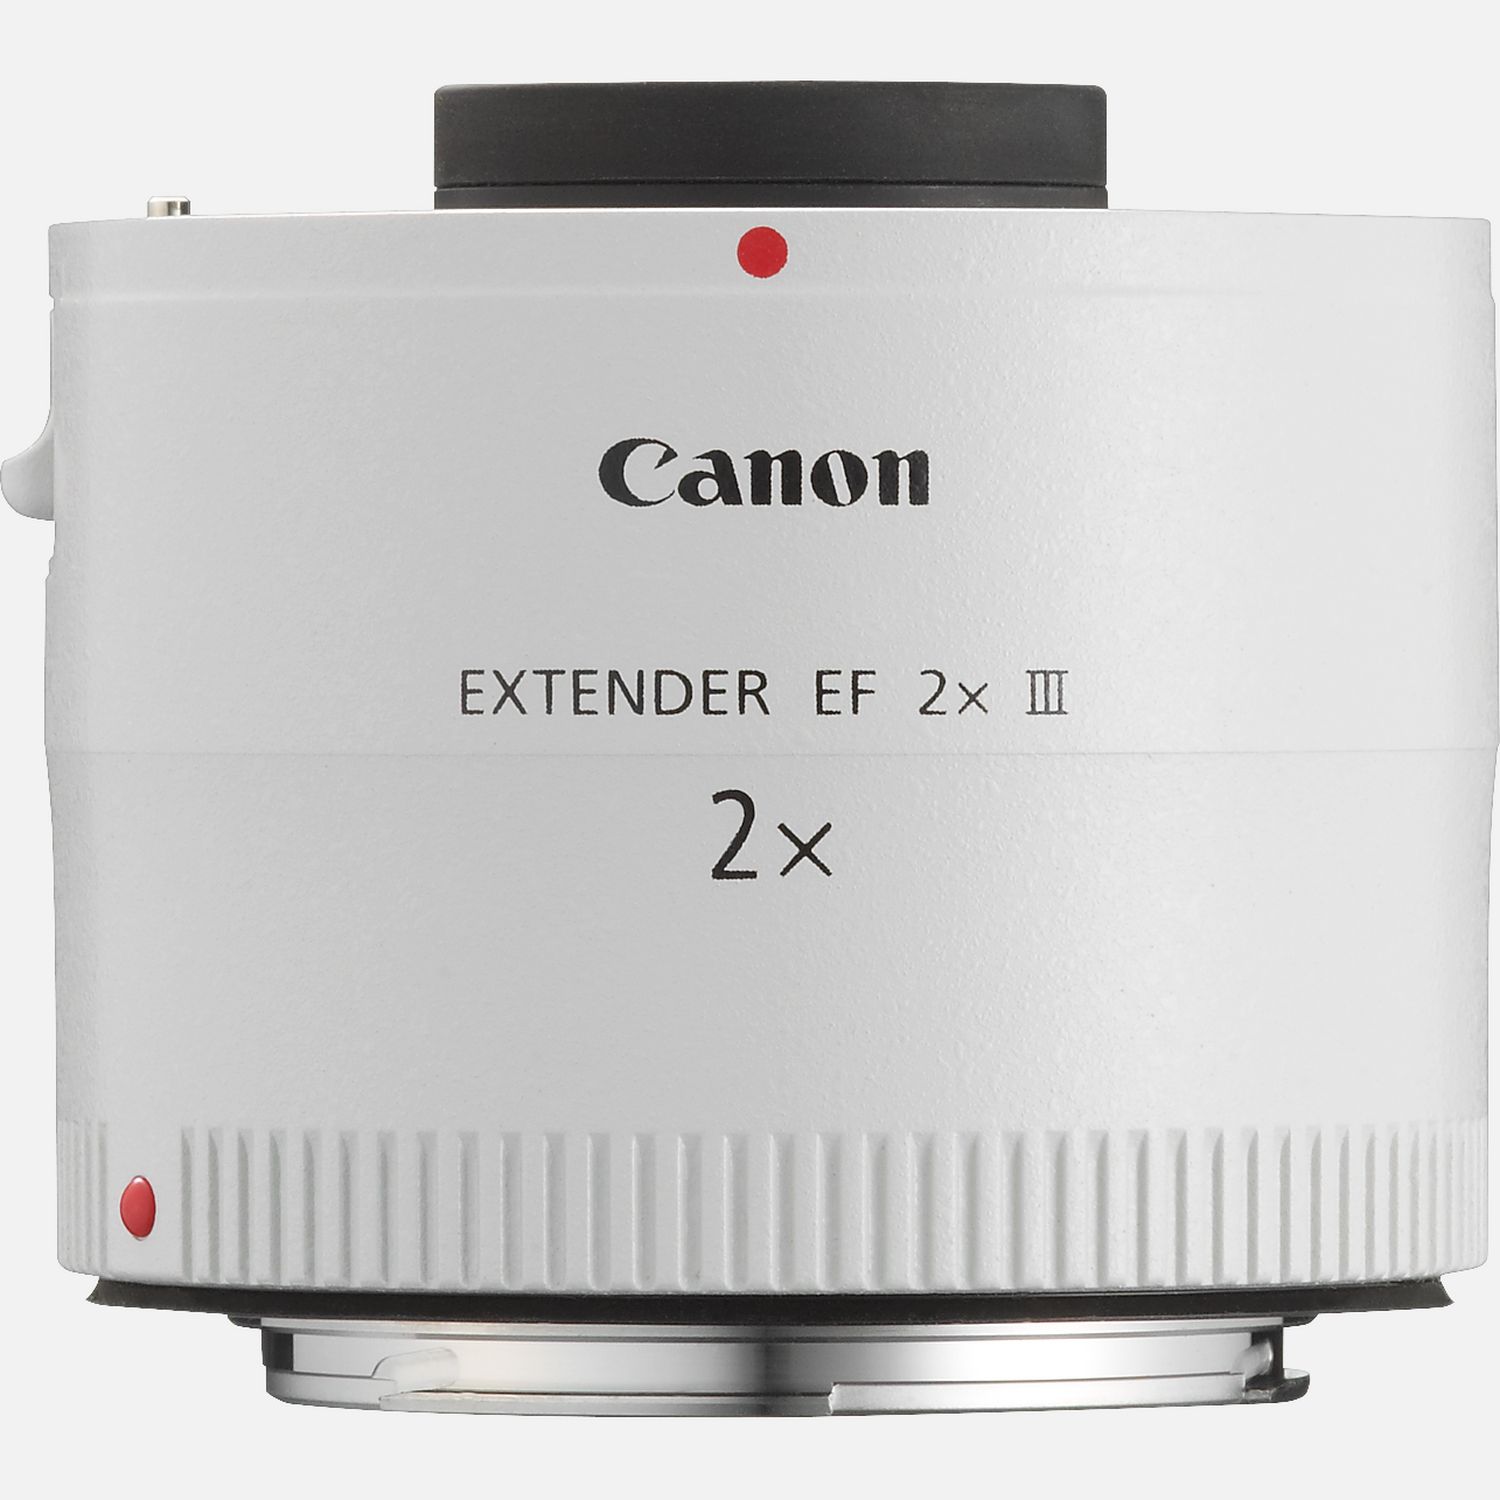 Image of Canon Extender EF 2x III